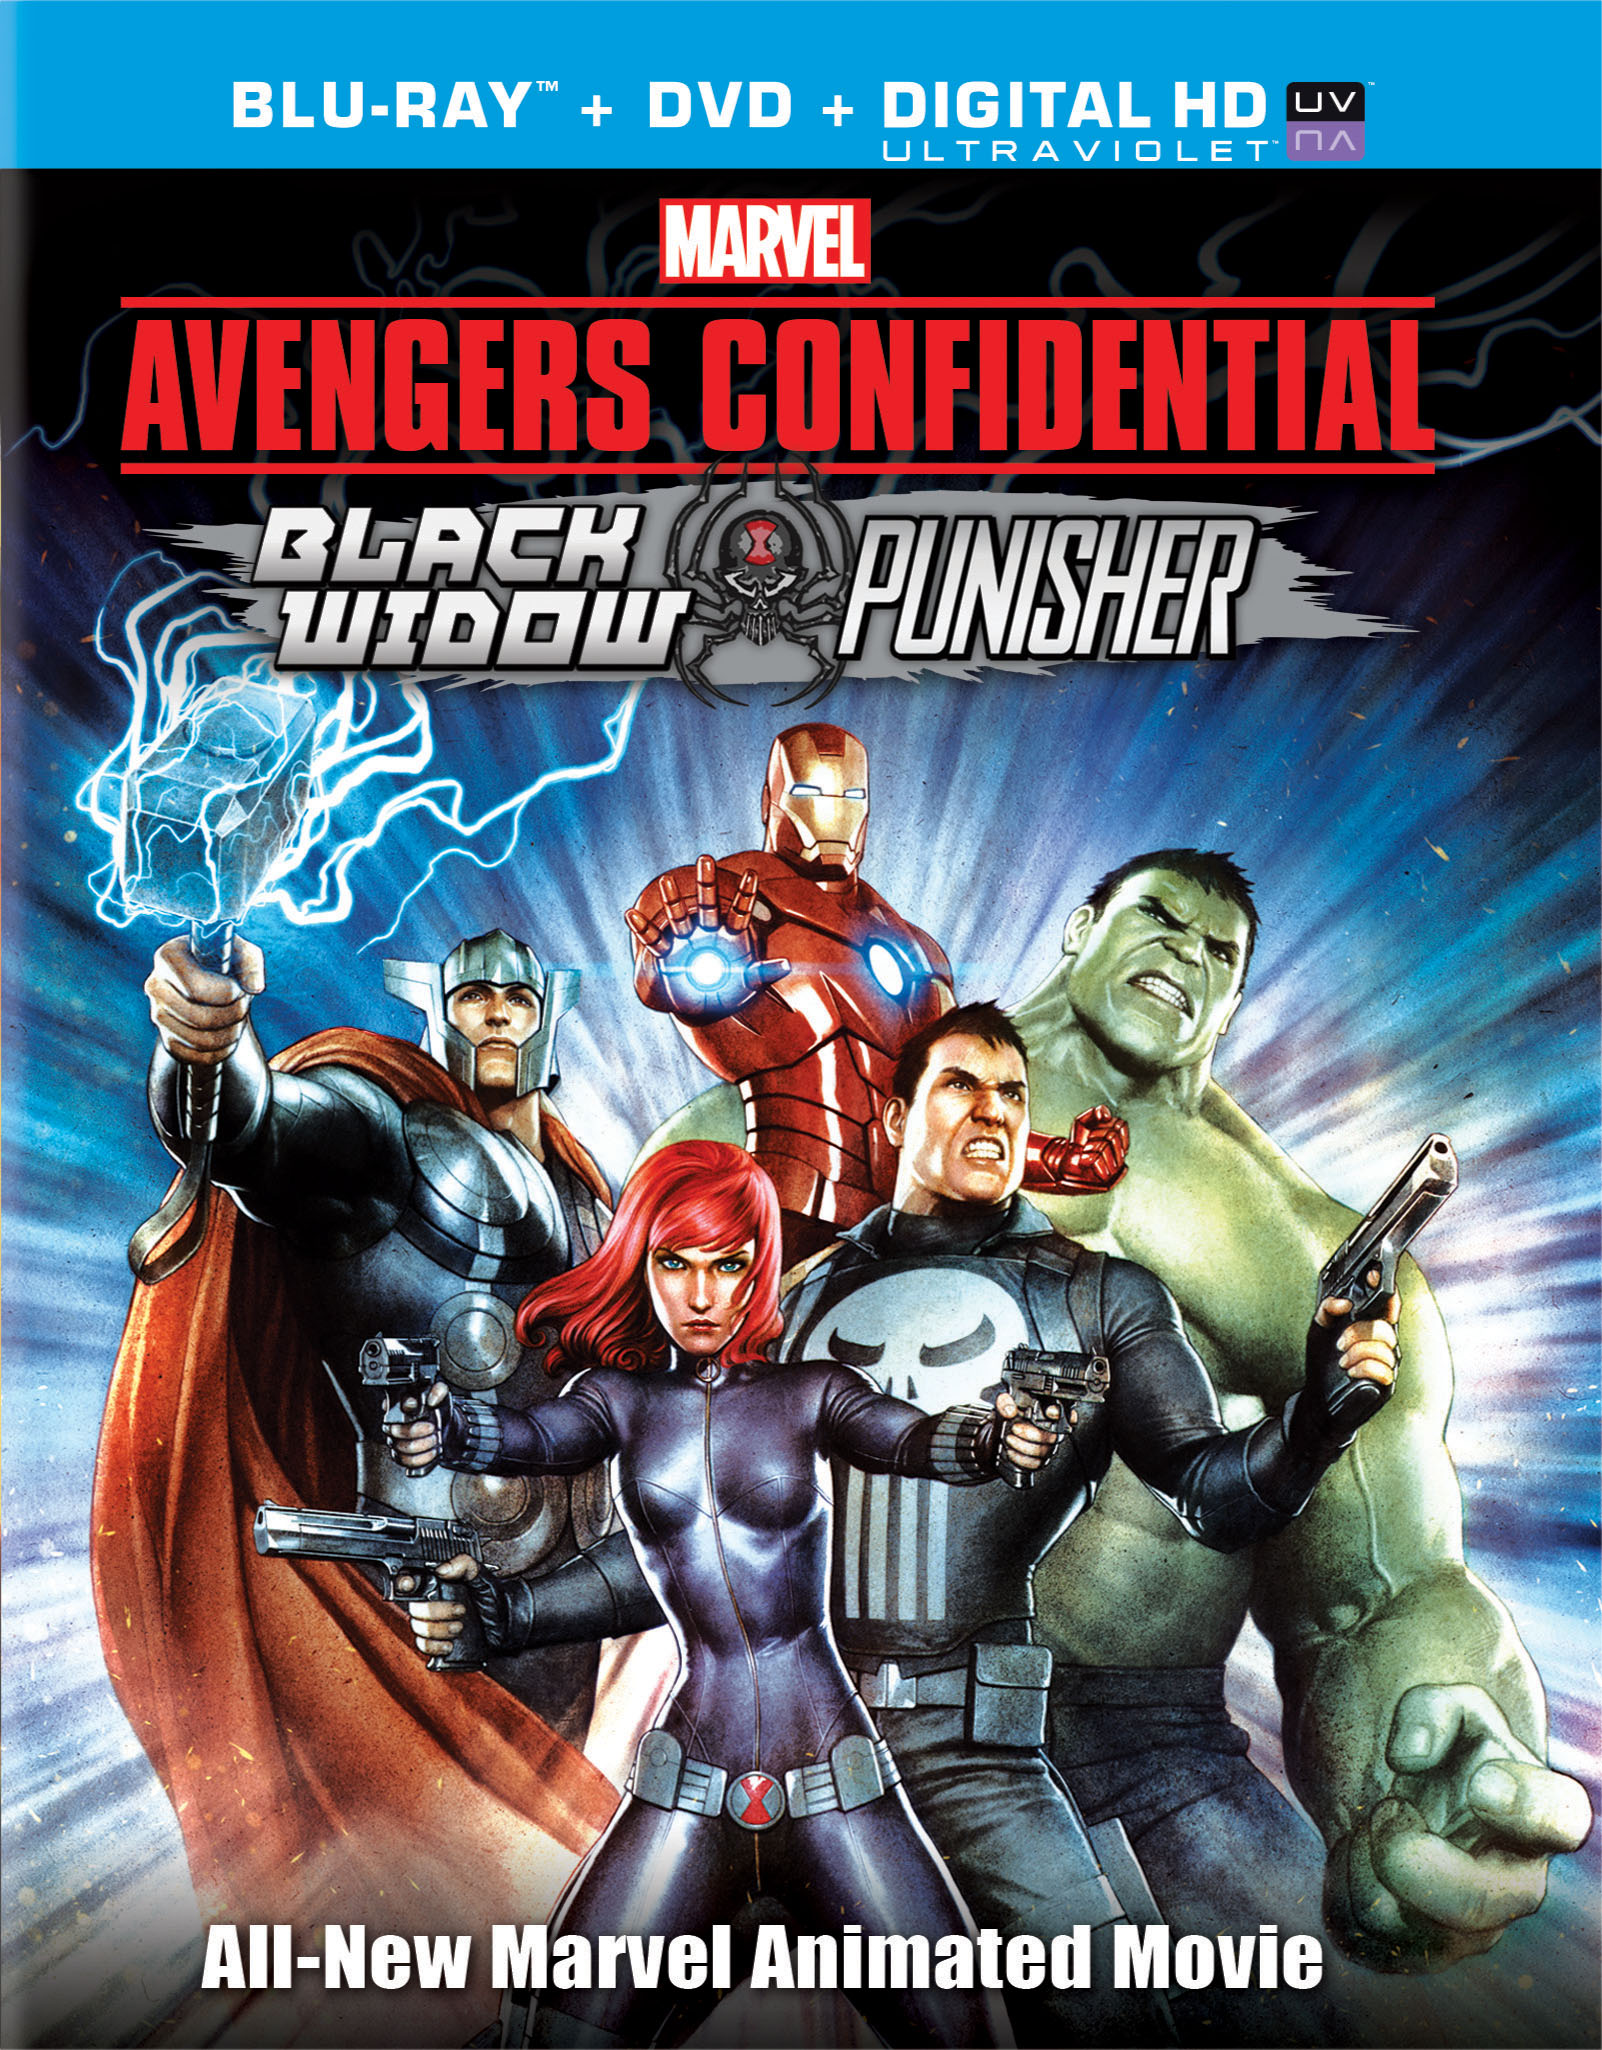 Avengers Confidential: Black Widow & Punisher [Blu-ray] [2014] - Best Buy